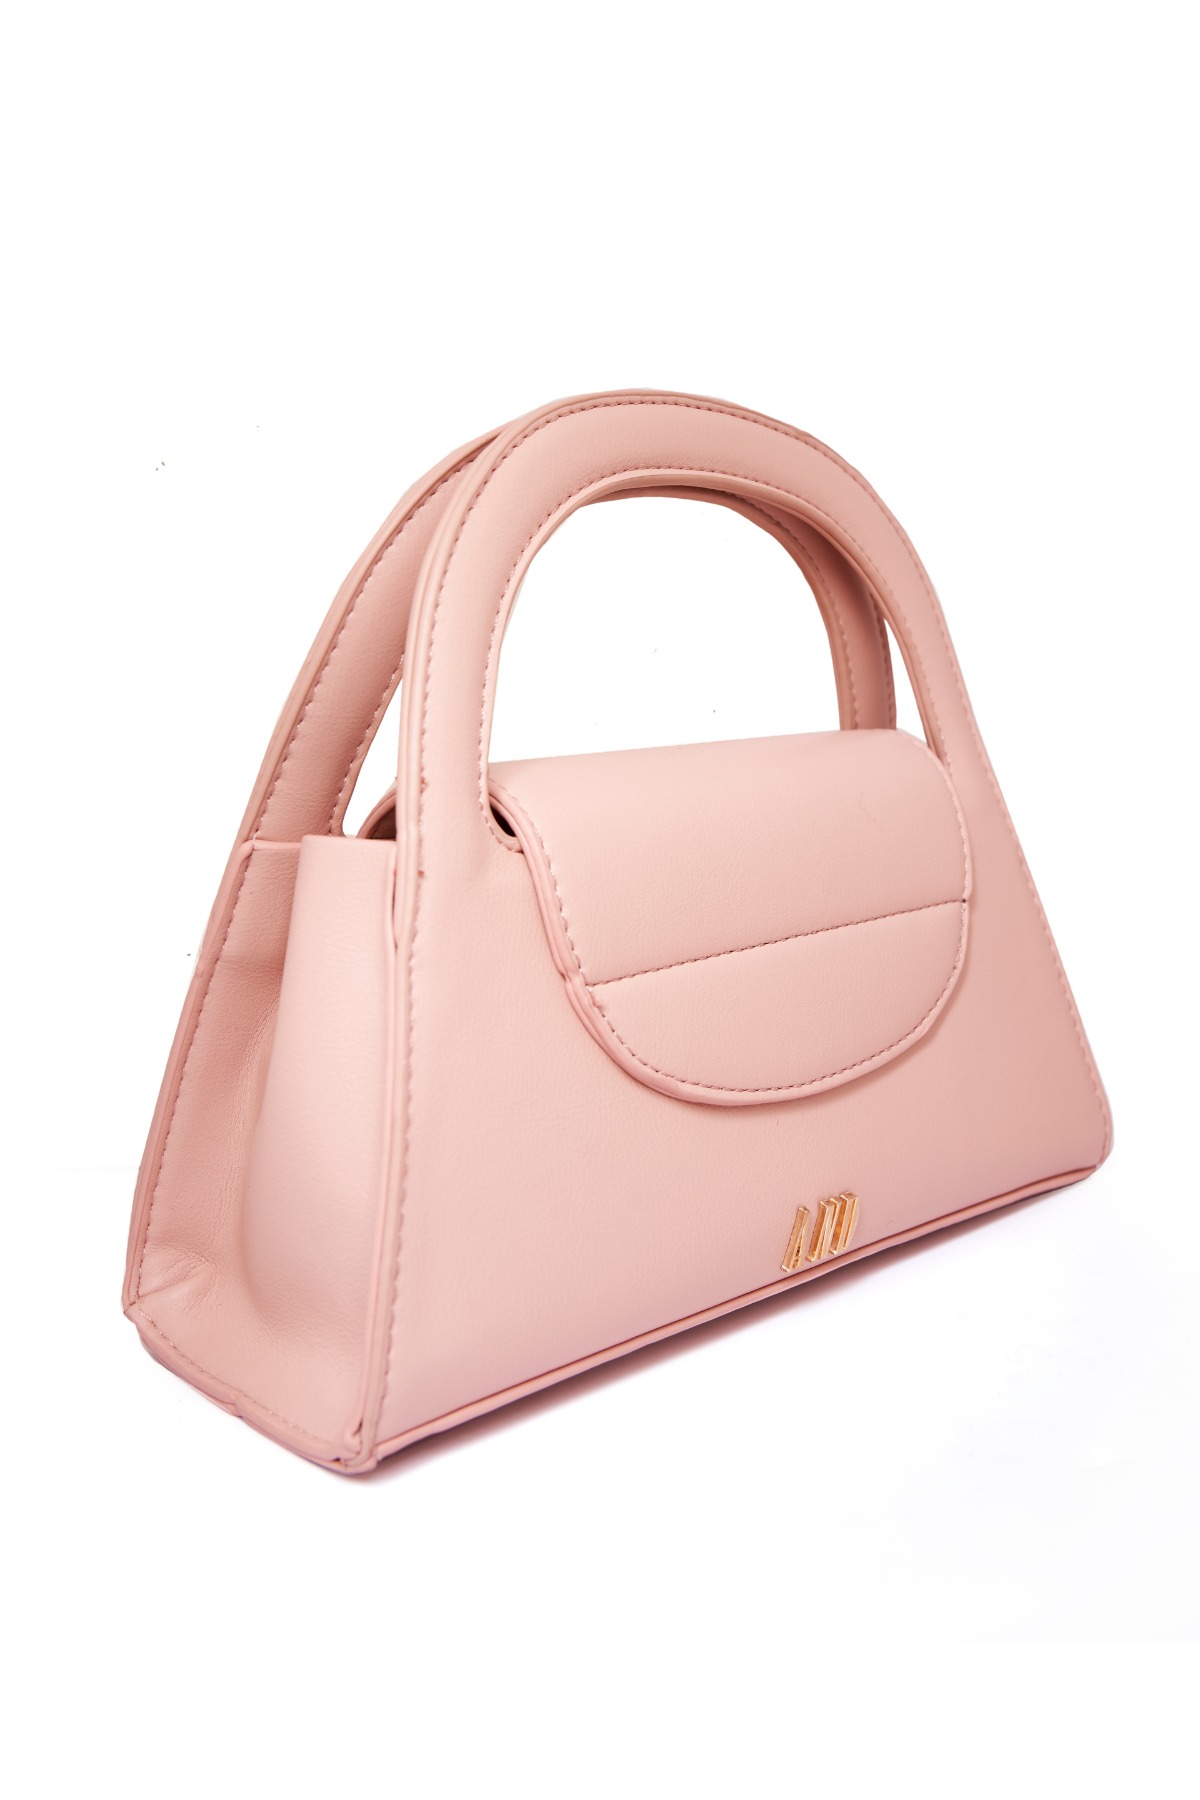 1 - Pink Handbag, image 1